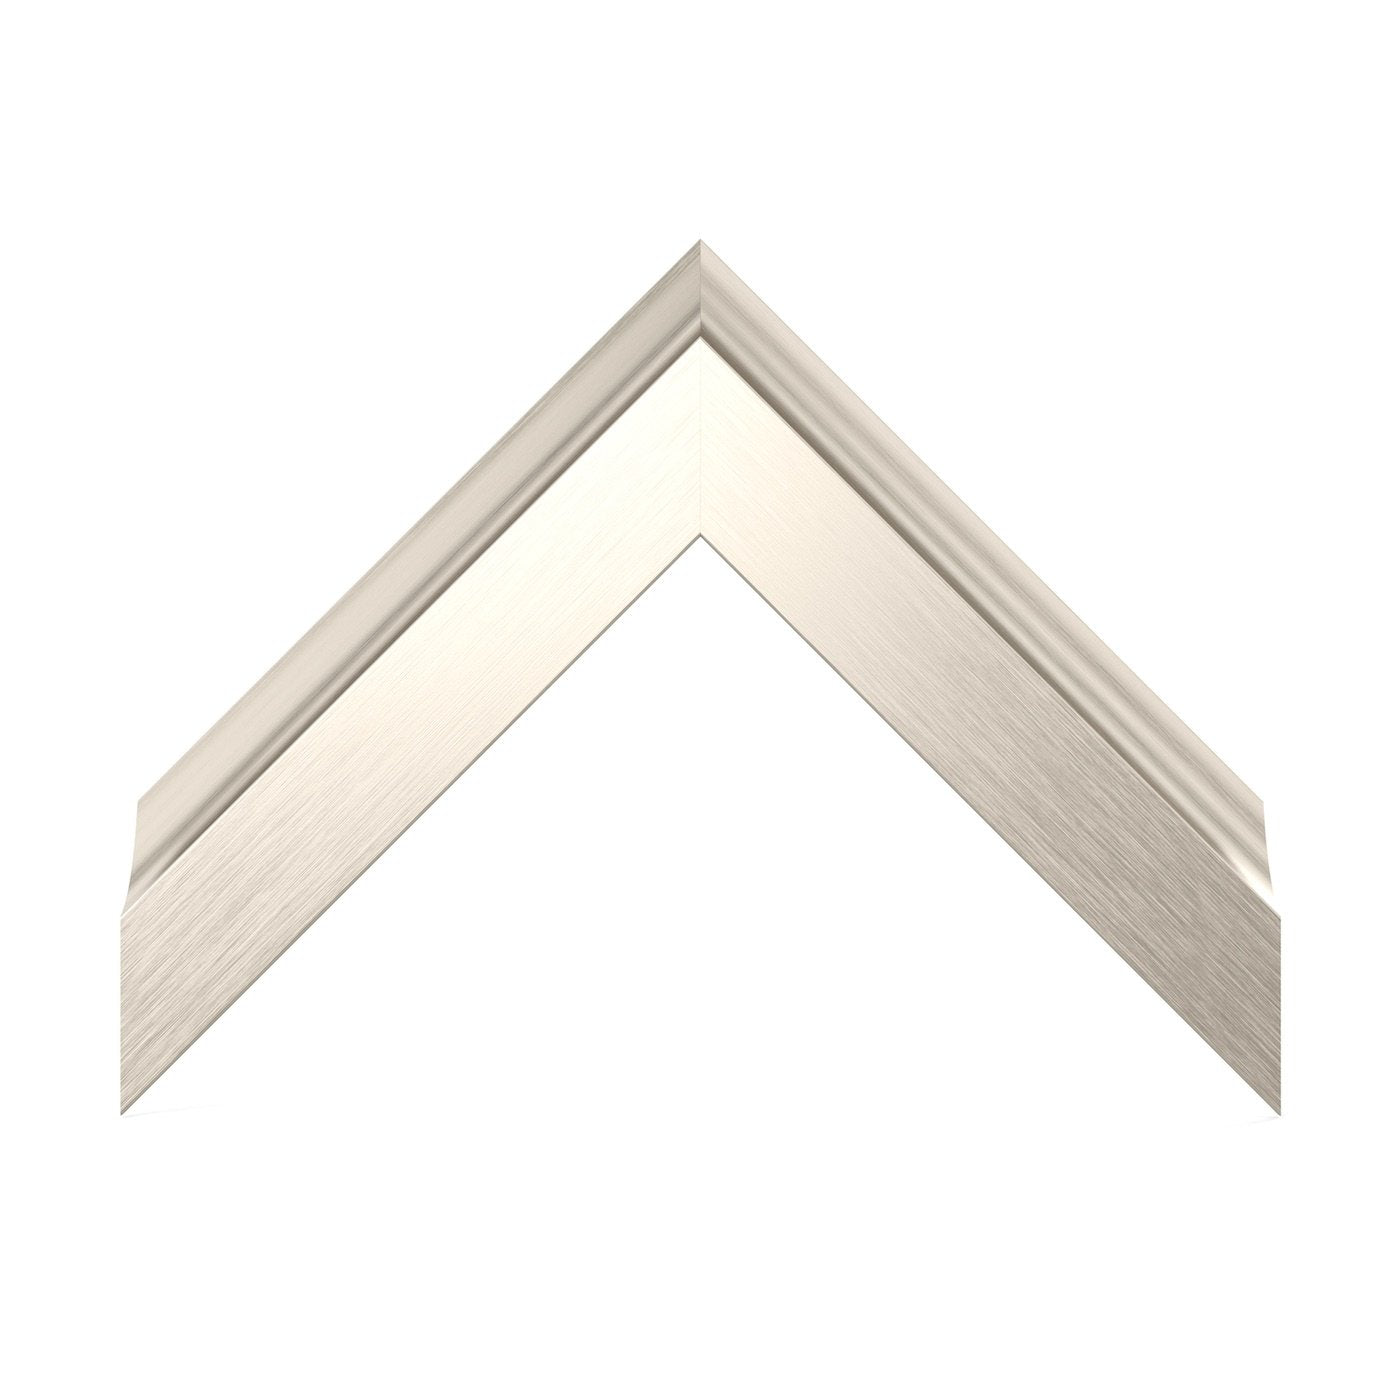 SAMPLE - German Silver Alloy - Profile: Scoop